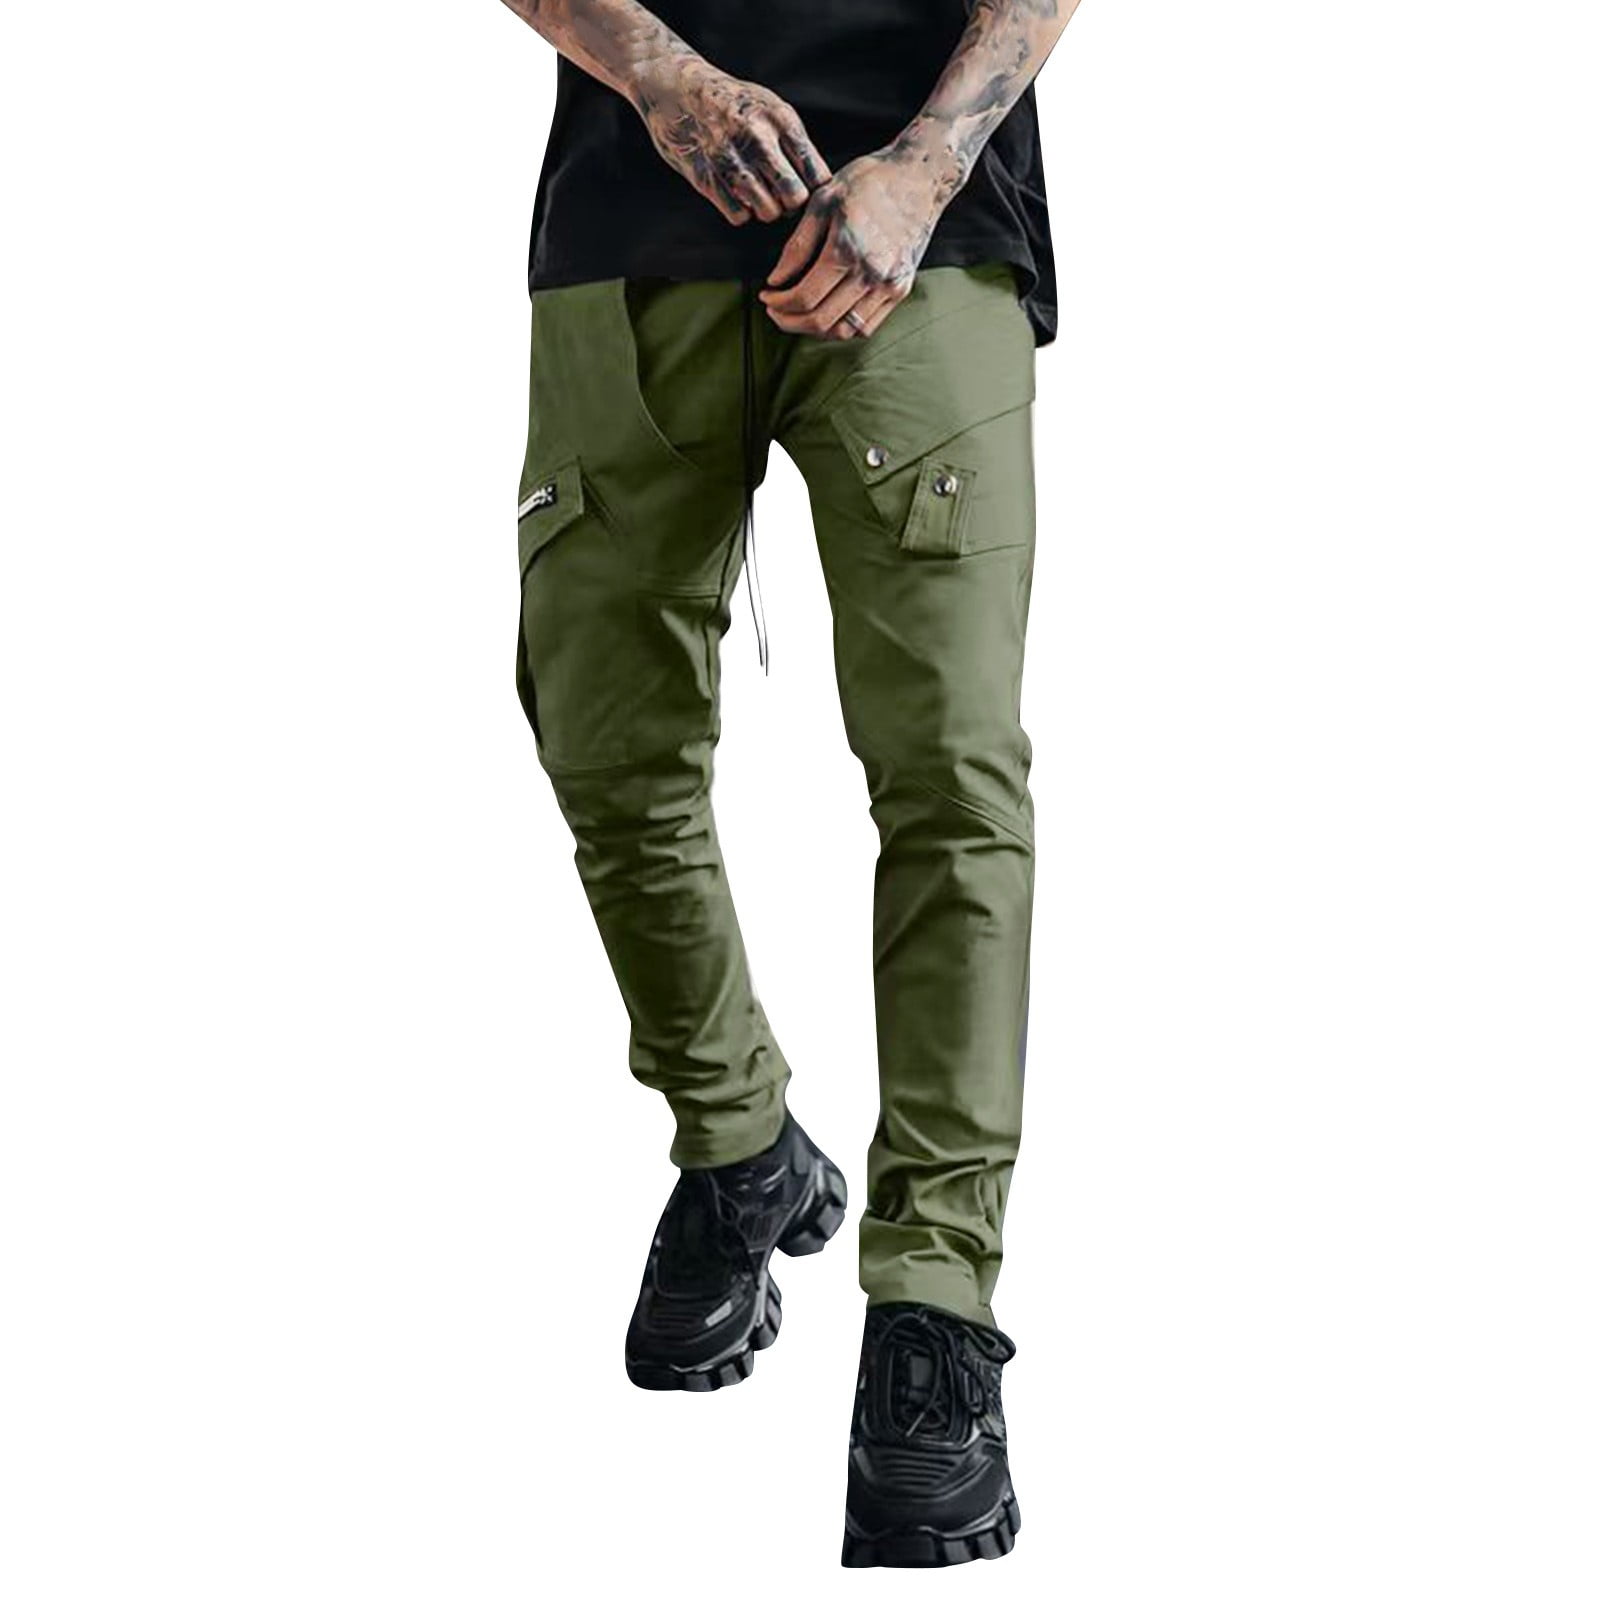 TRGPSG Men's Tactical Pants with 10 Pockets Combat Cargo Work Pants,Khaki  36 - Walmart.com